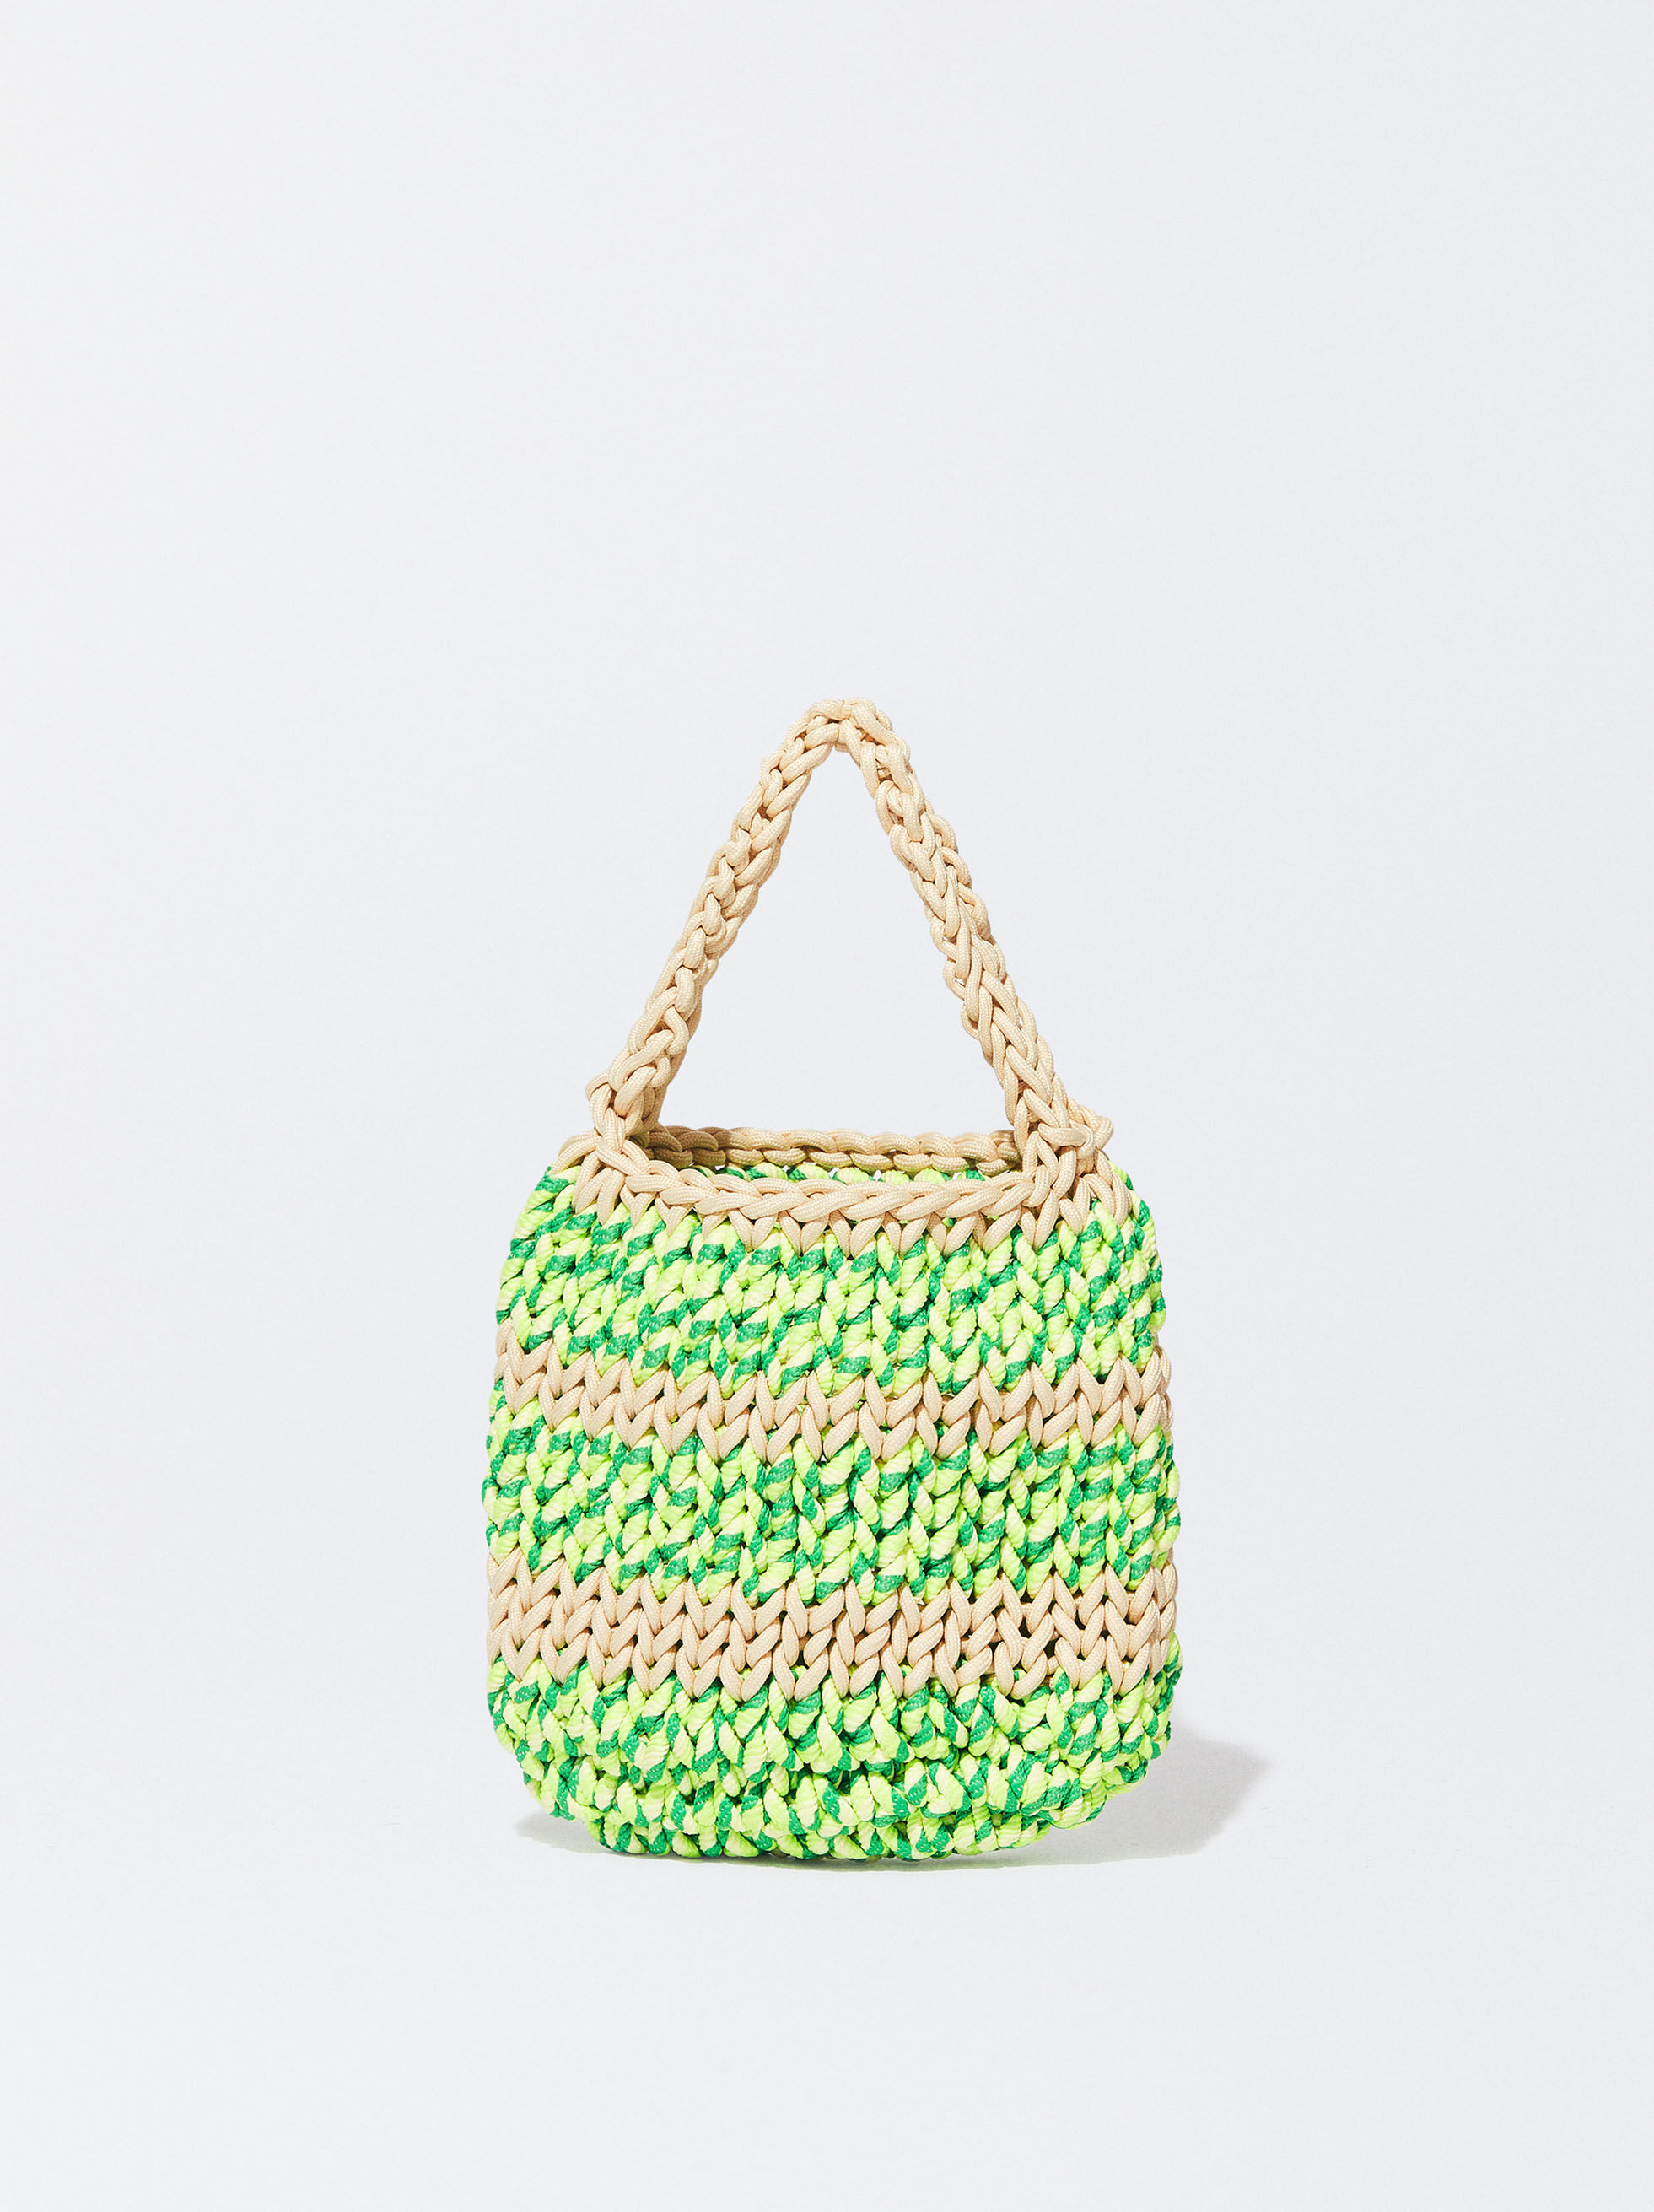 Shop Handmade Crochet Handbags online | Lazada.com.my